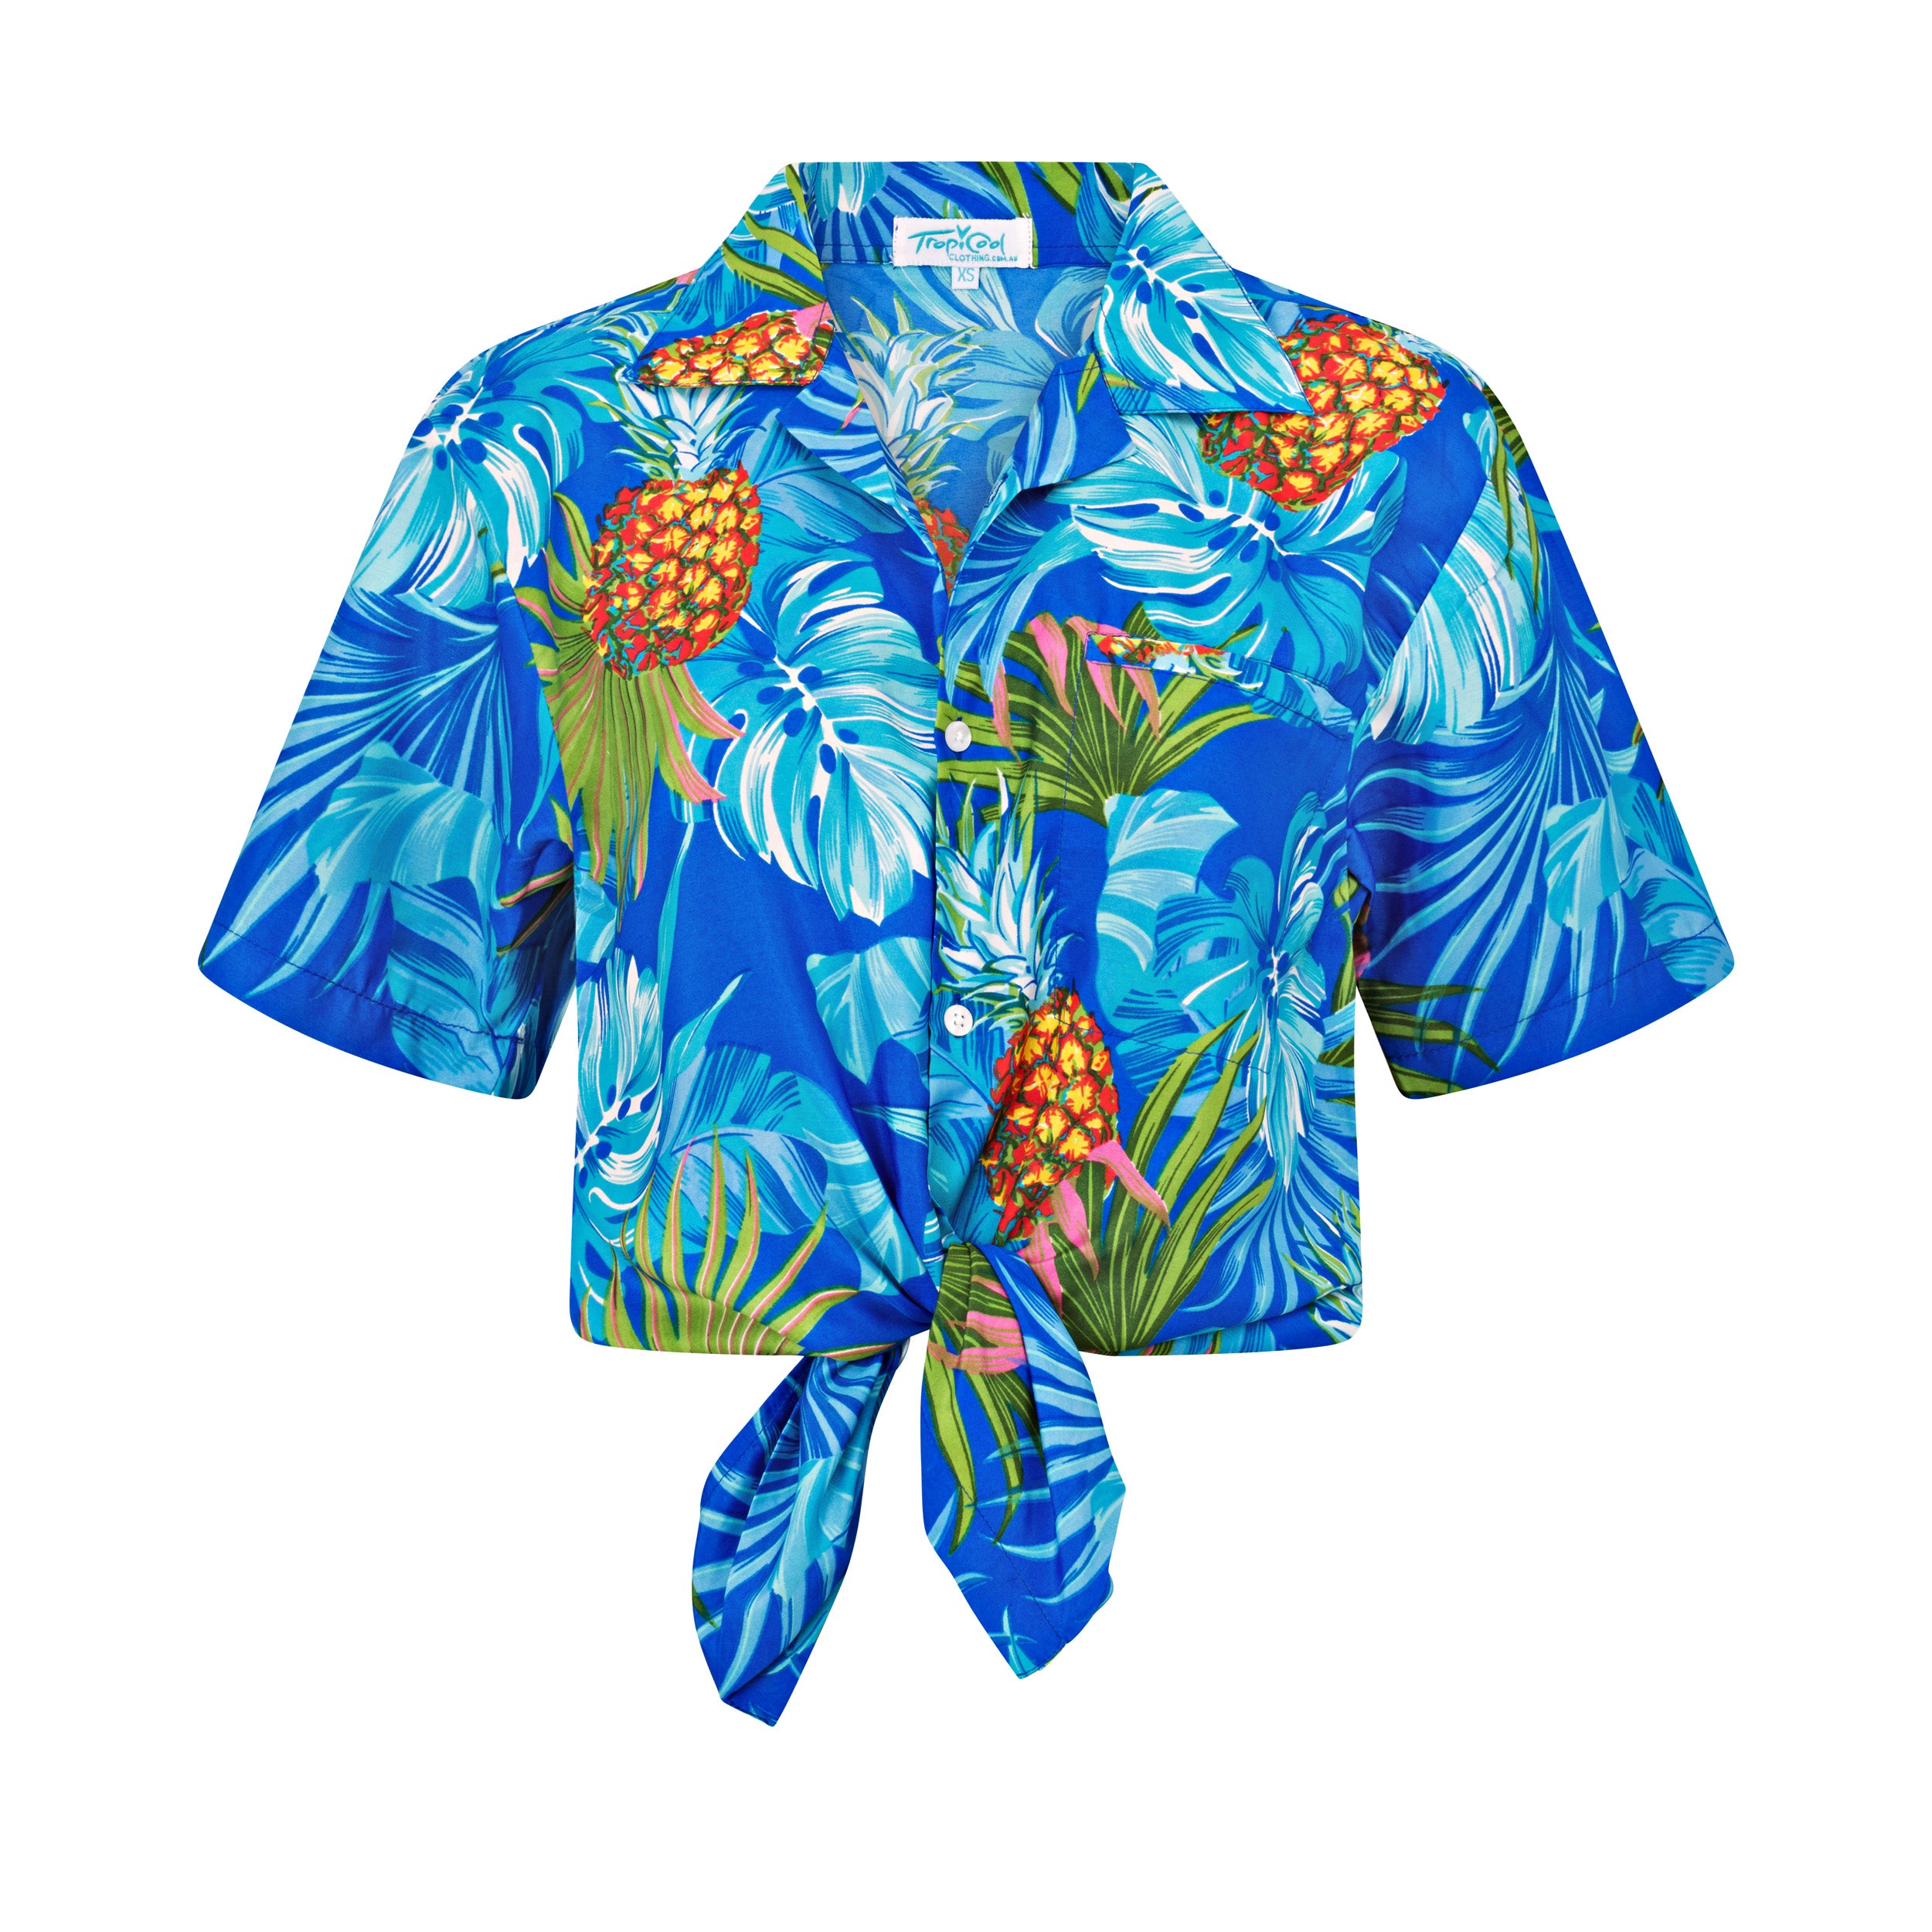 Pineapple Jungle Blue Adult Shirt